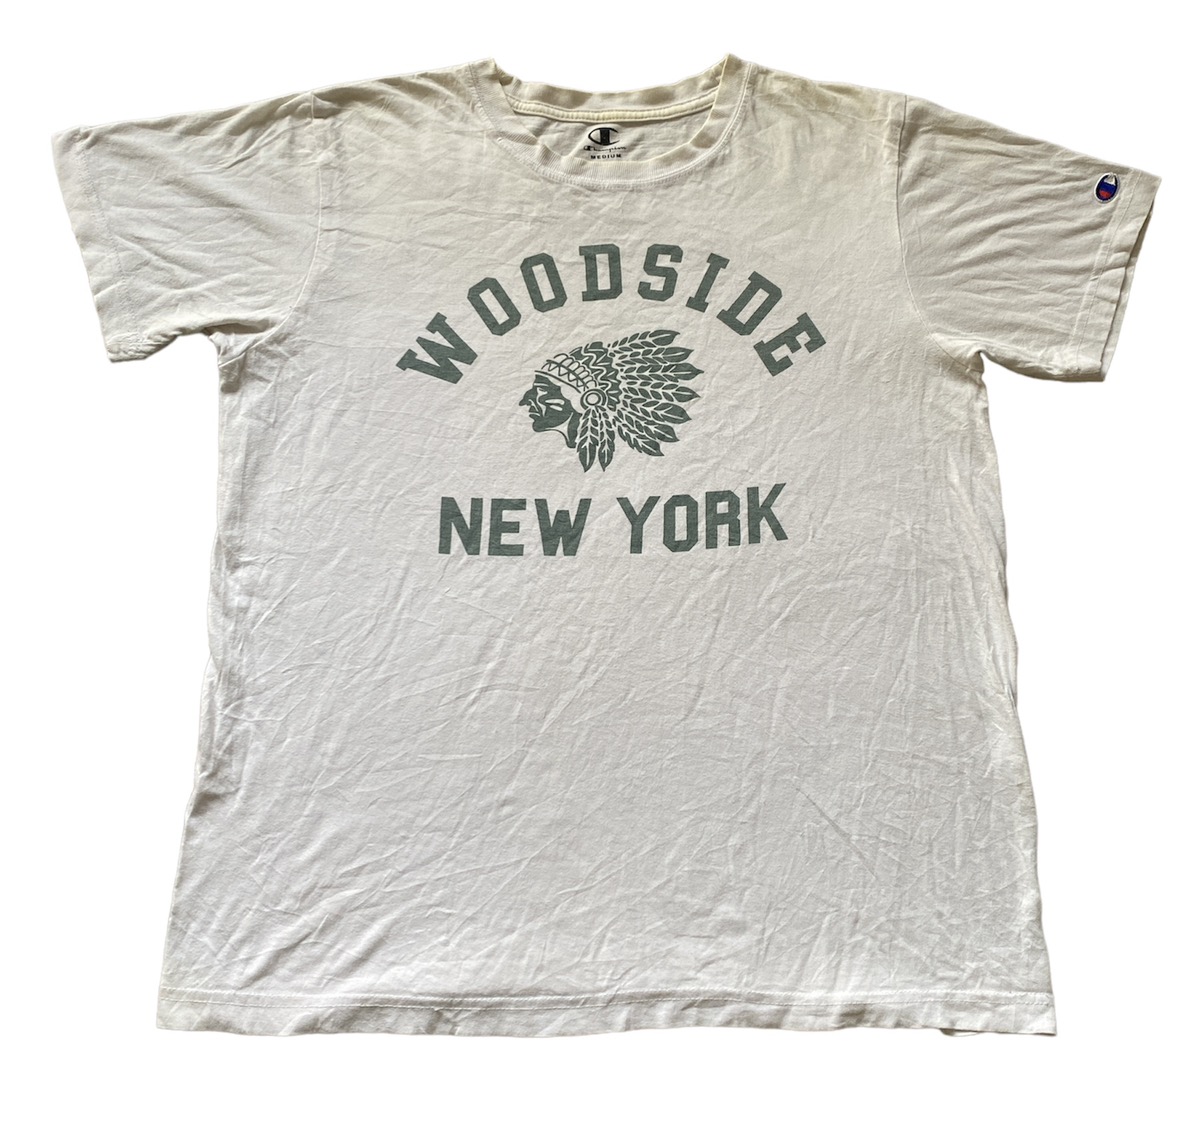 Woodside New York tshirt champion - 1